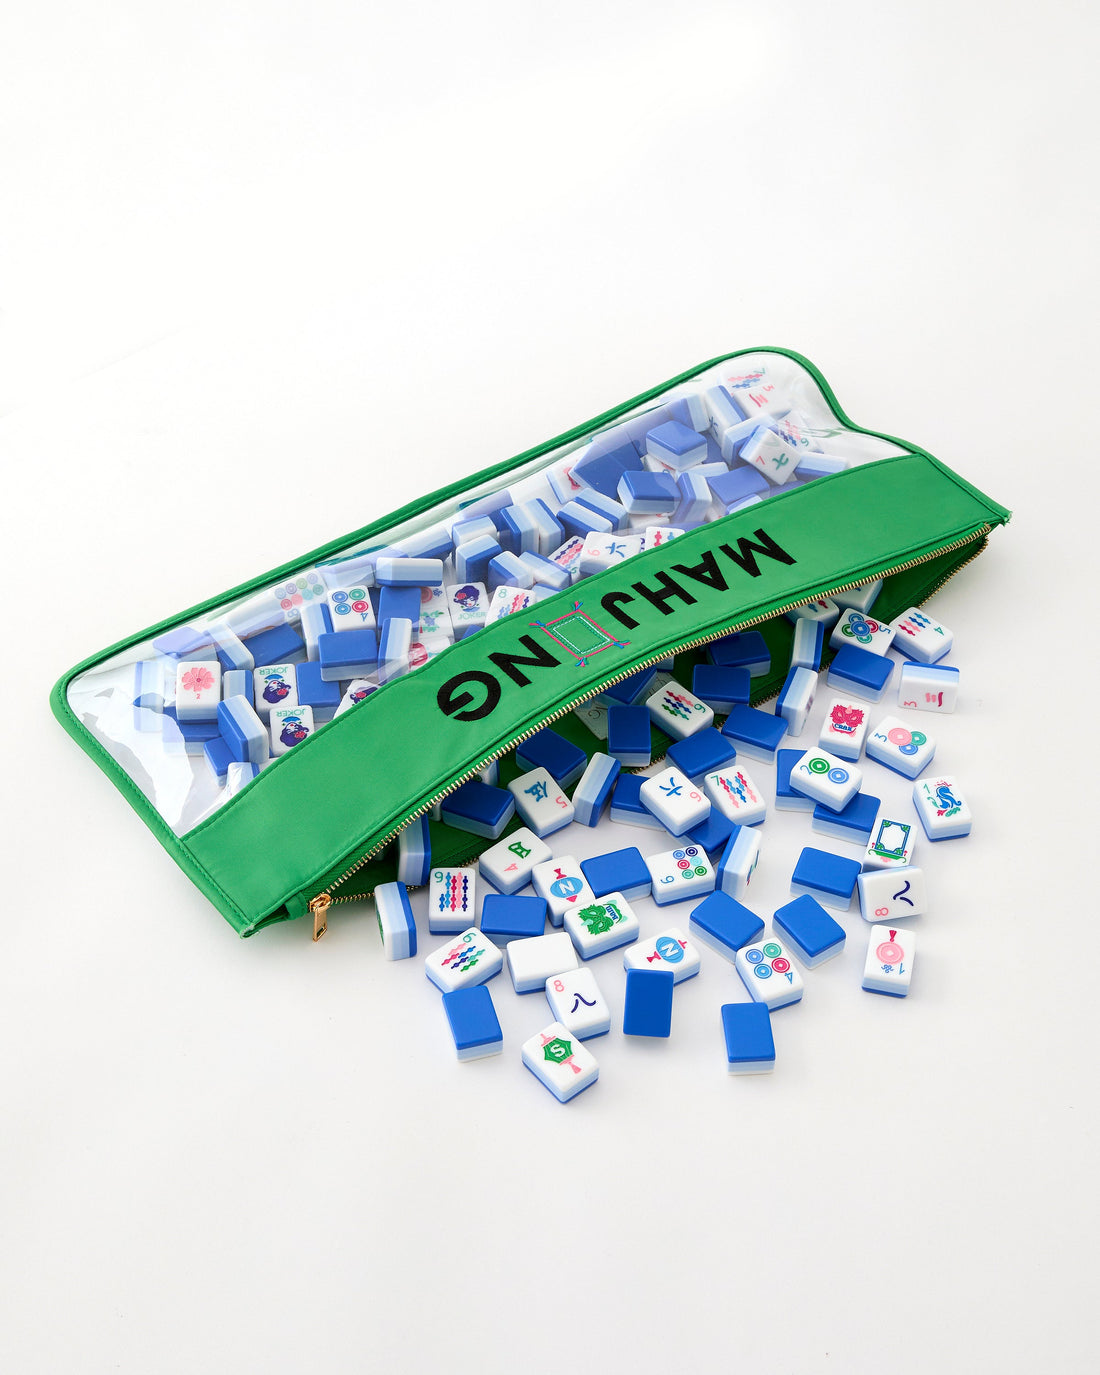 Green Stitched Mahjong Bag - Oh My Mahjong